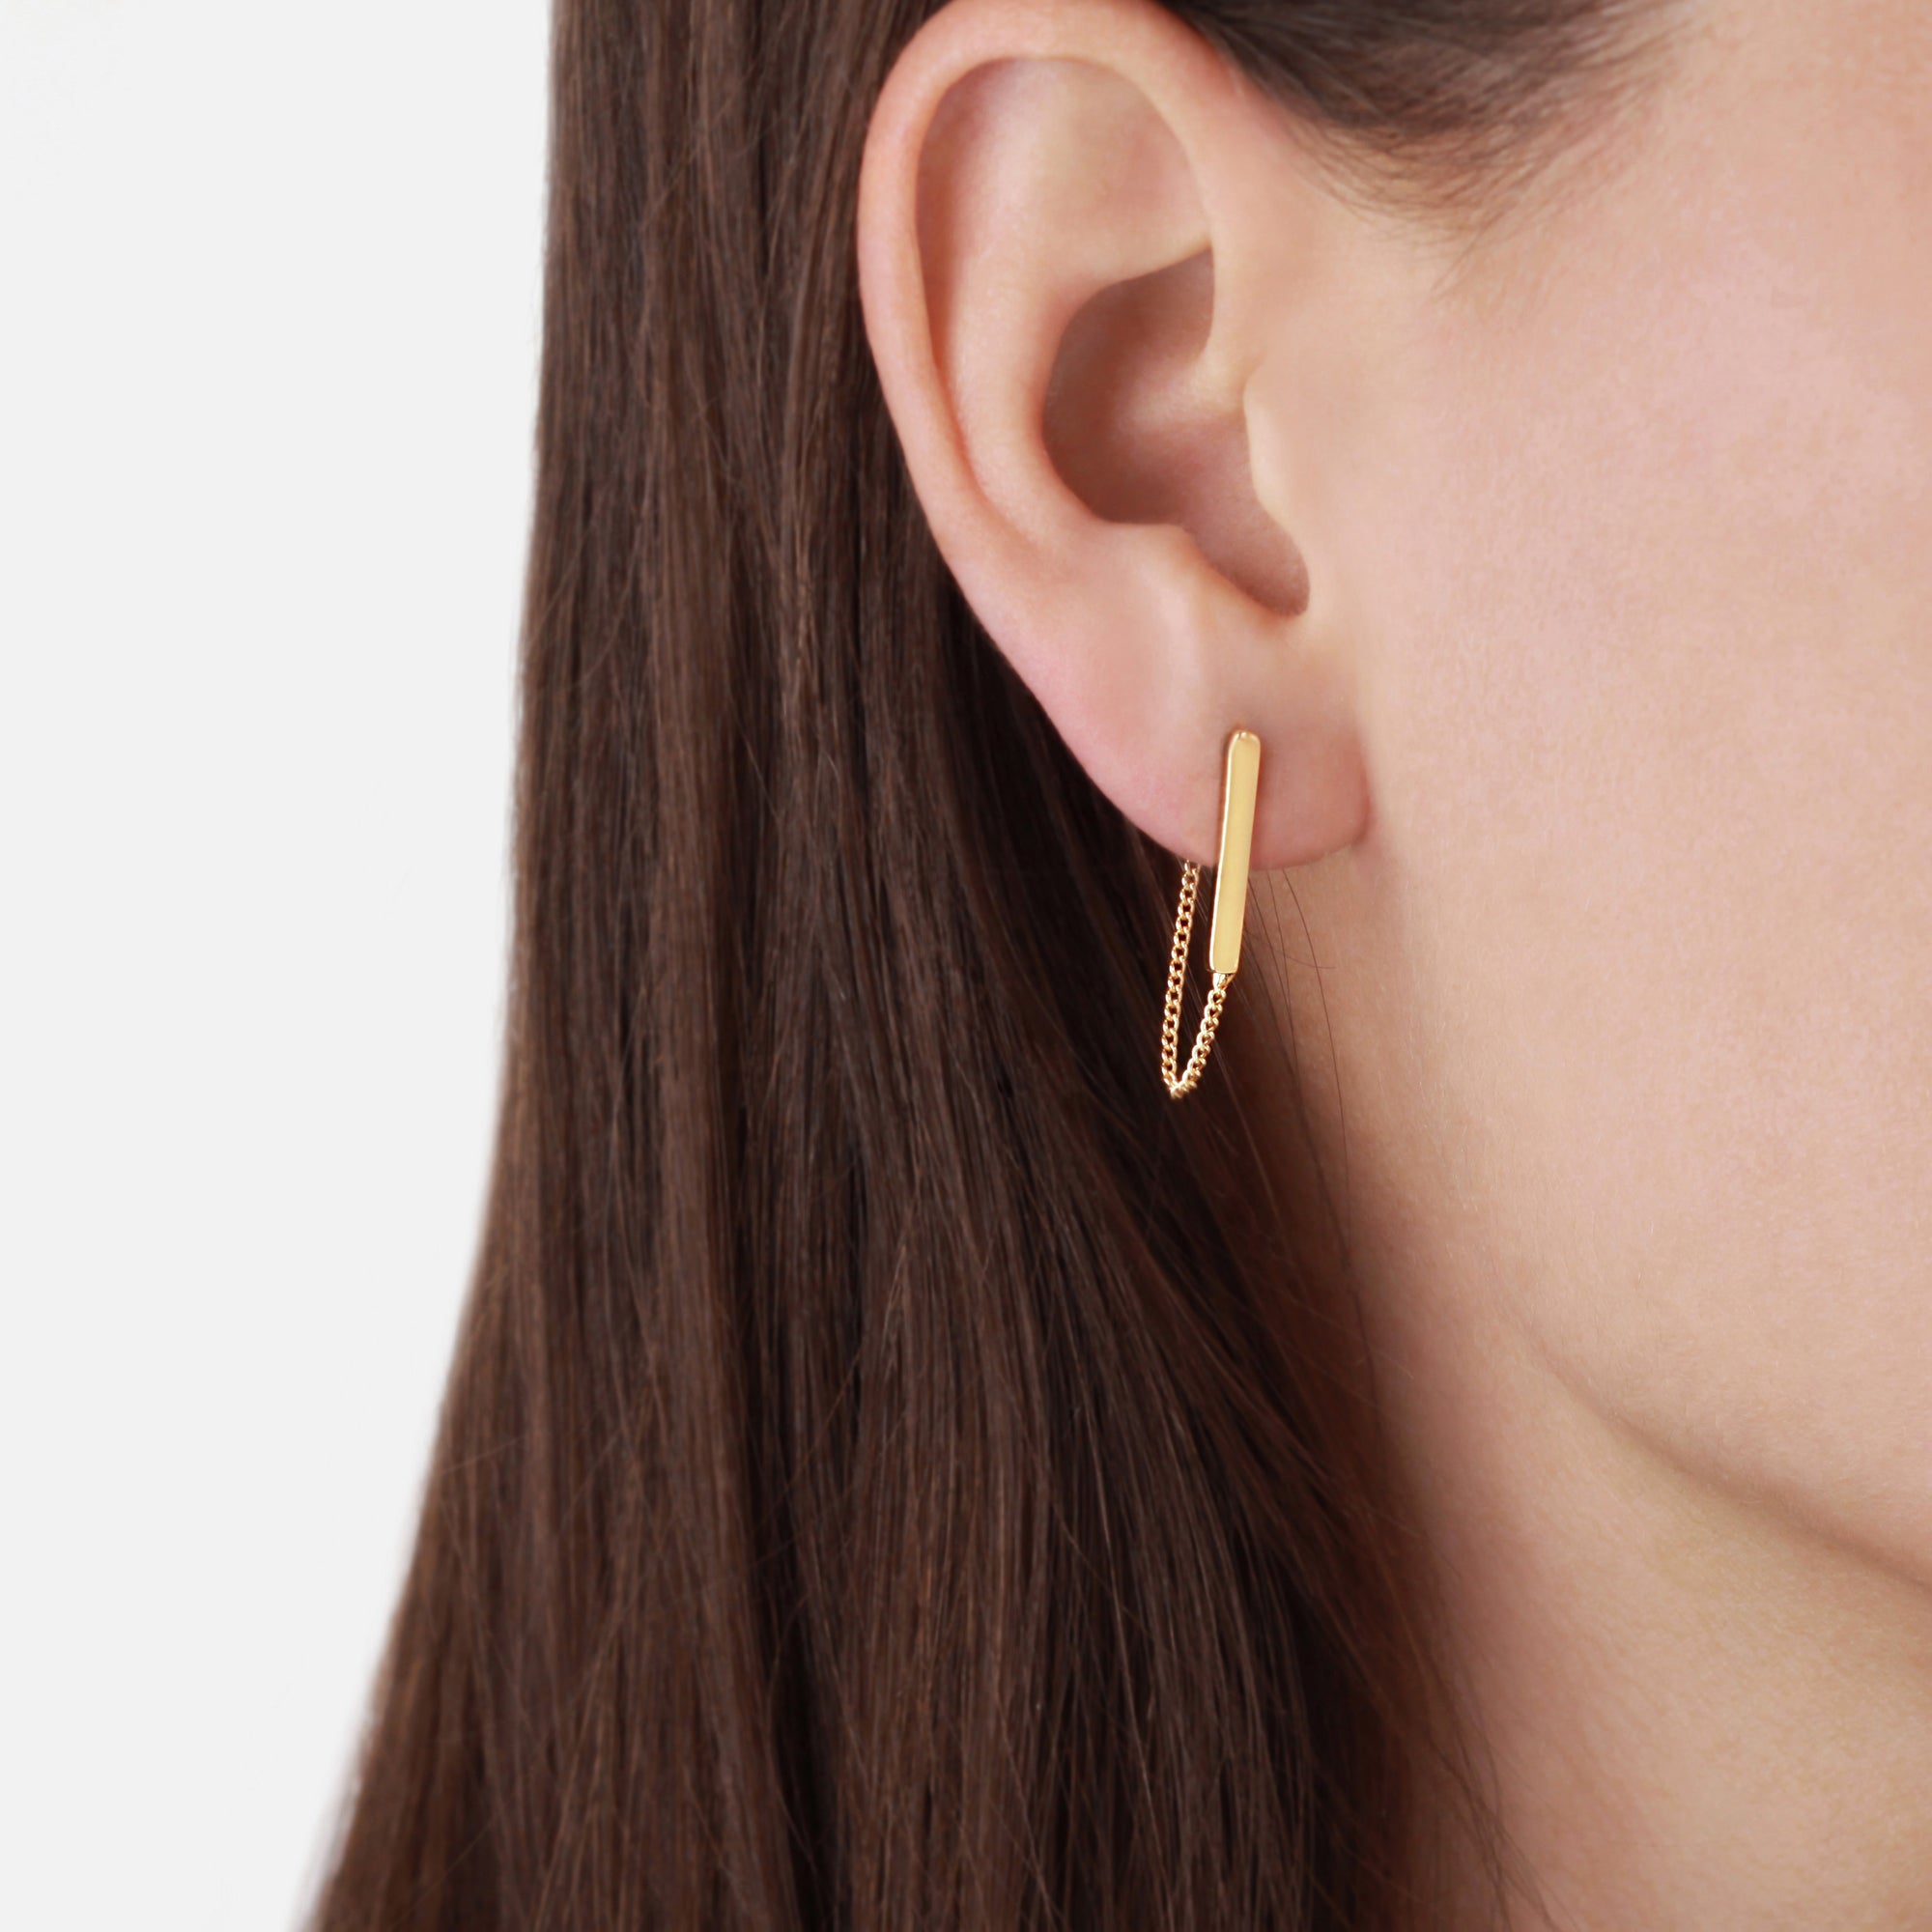 Chain and bar earrings